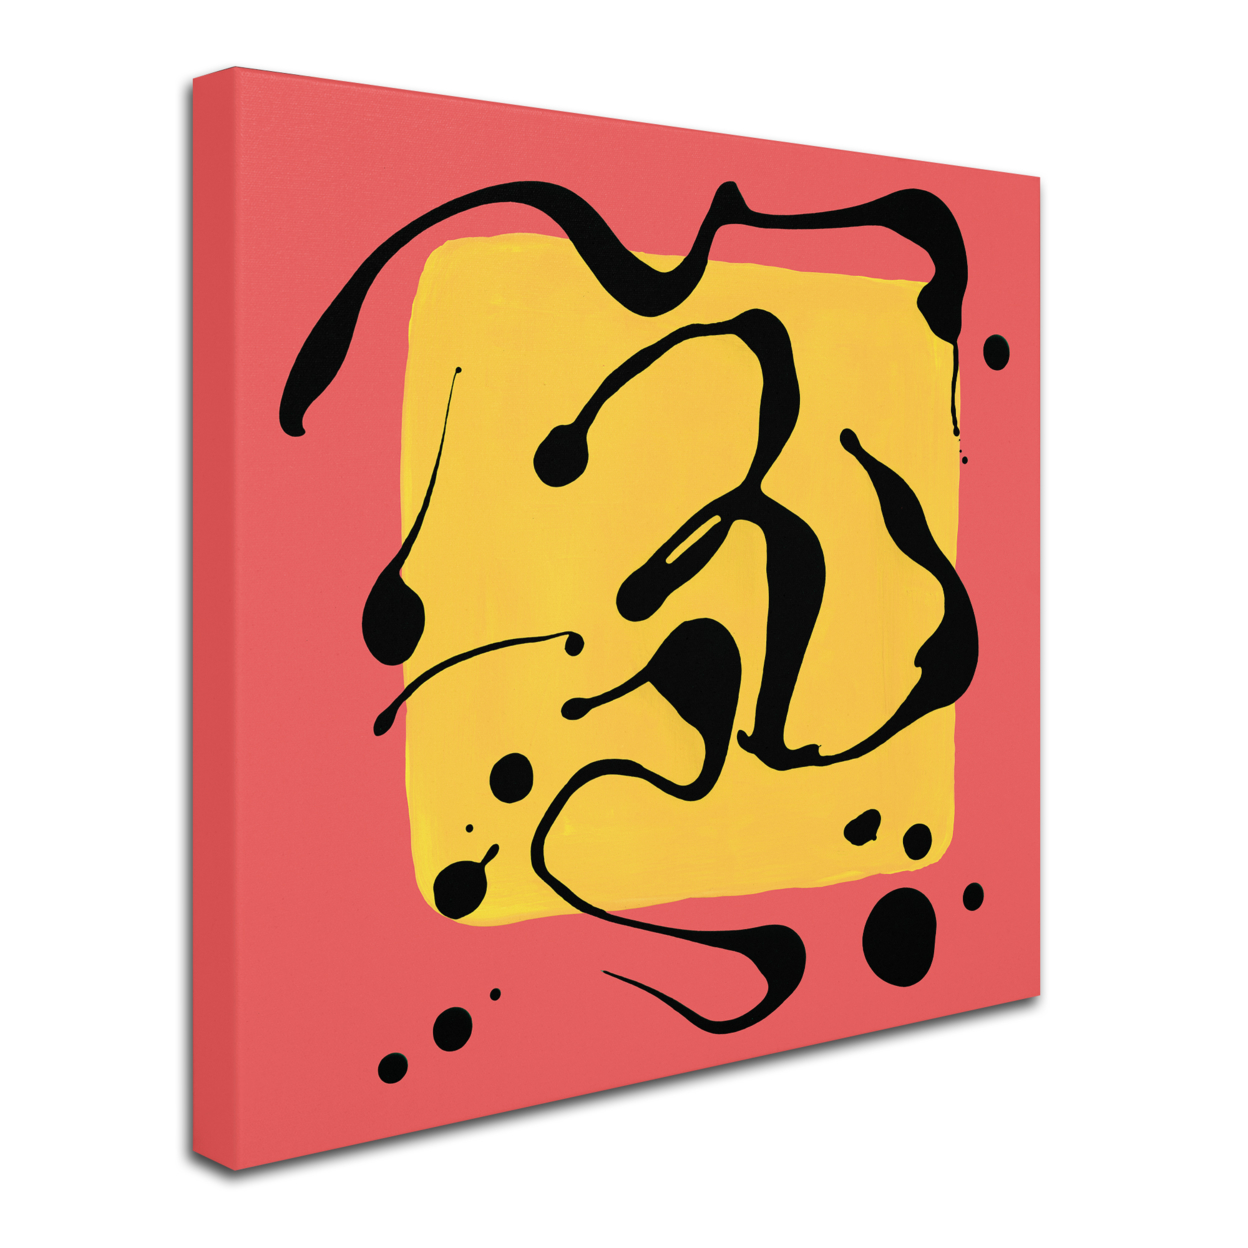 Amy Vangsgard 'Yellow Square On Pink' Huge Canvas Art 35 X 35